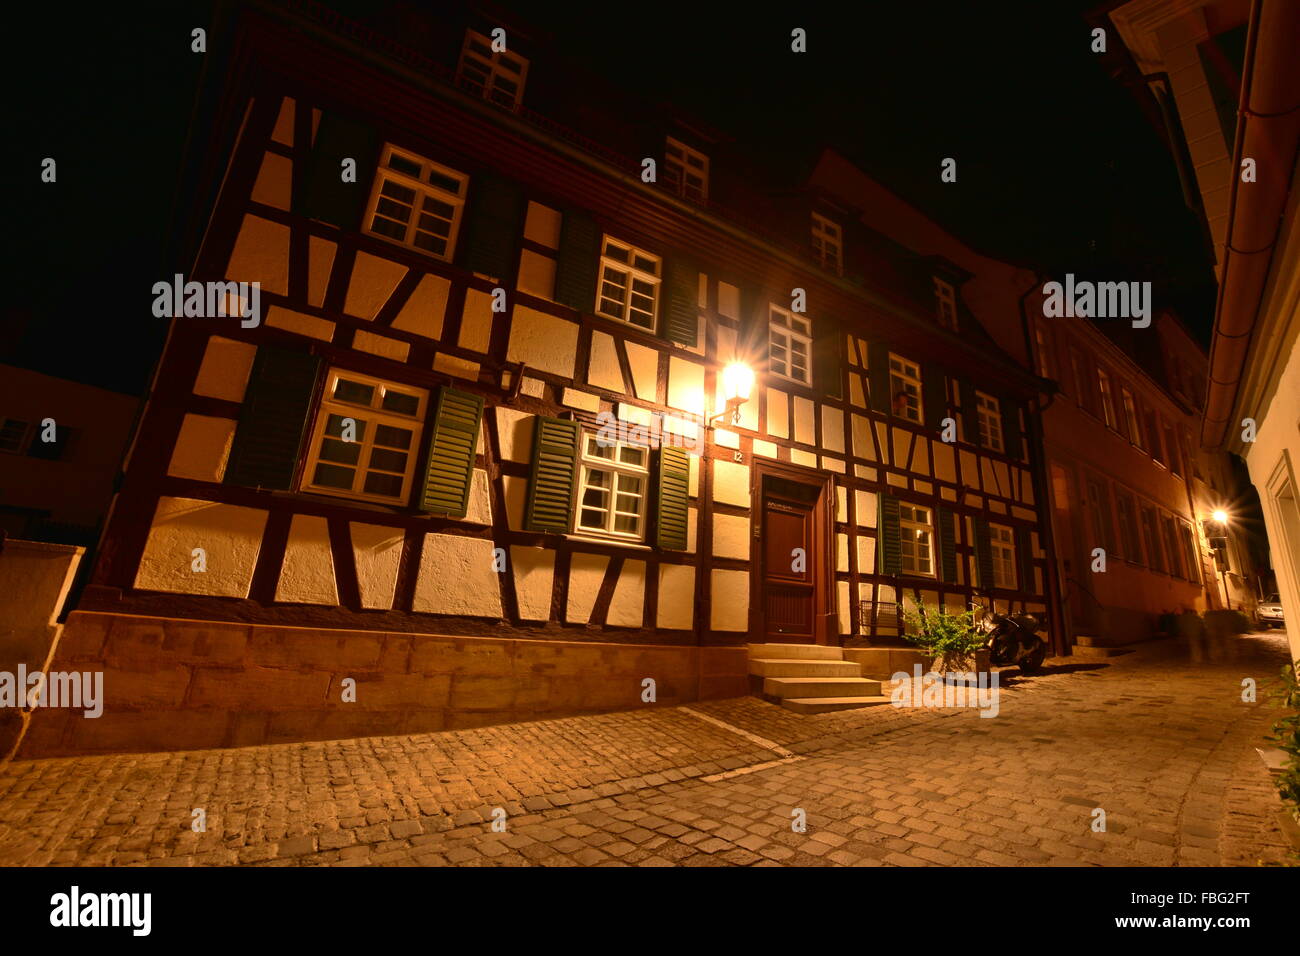 Bamberg, Germany - Historic half-timber house at night Stock Photo